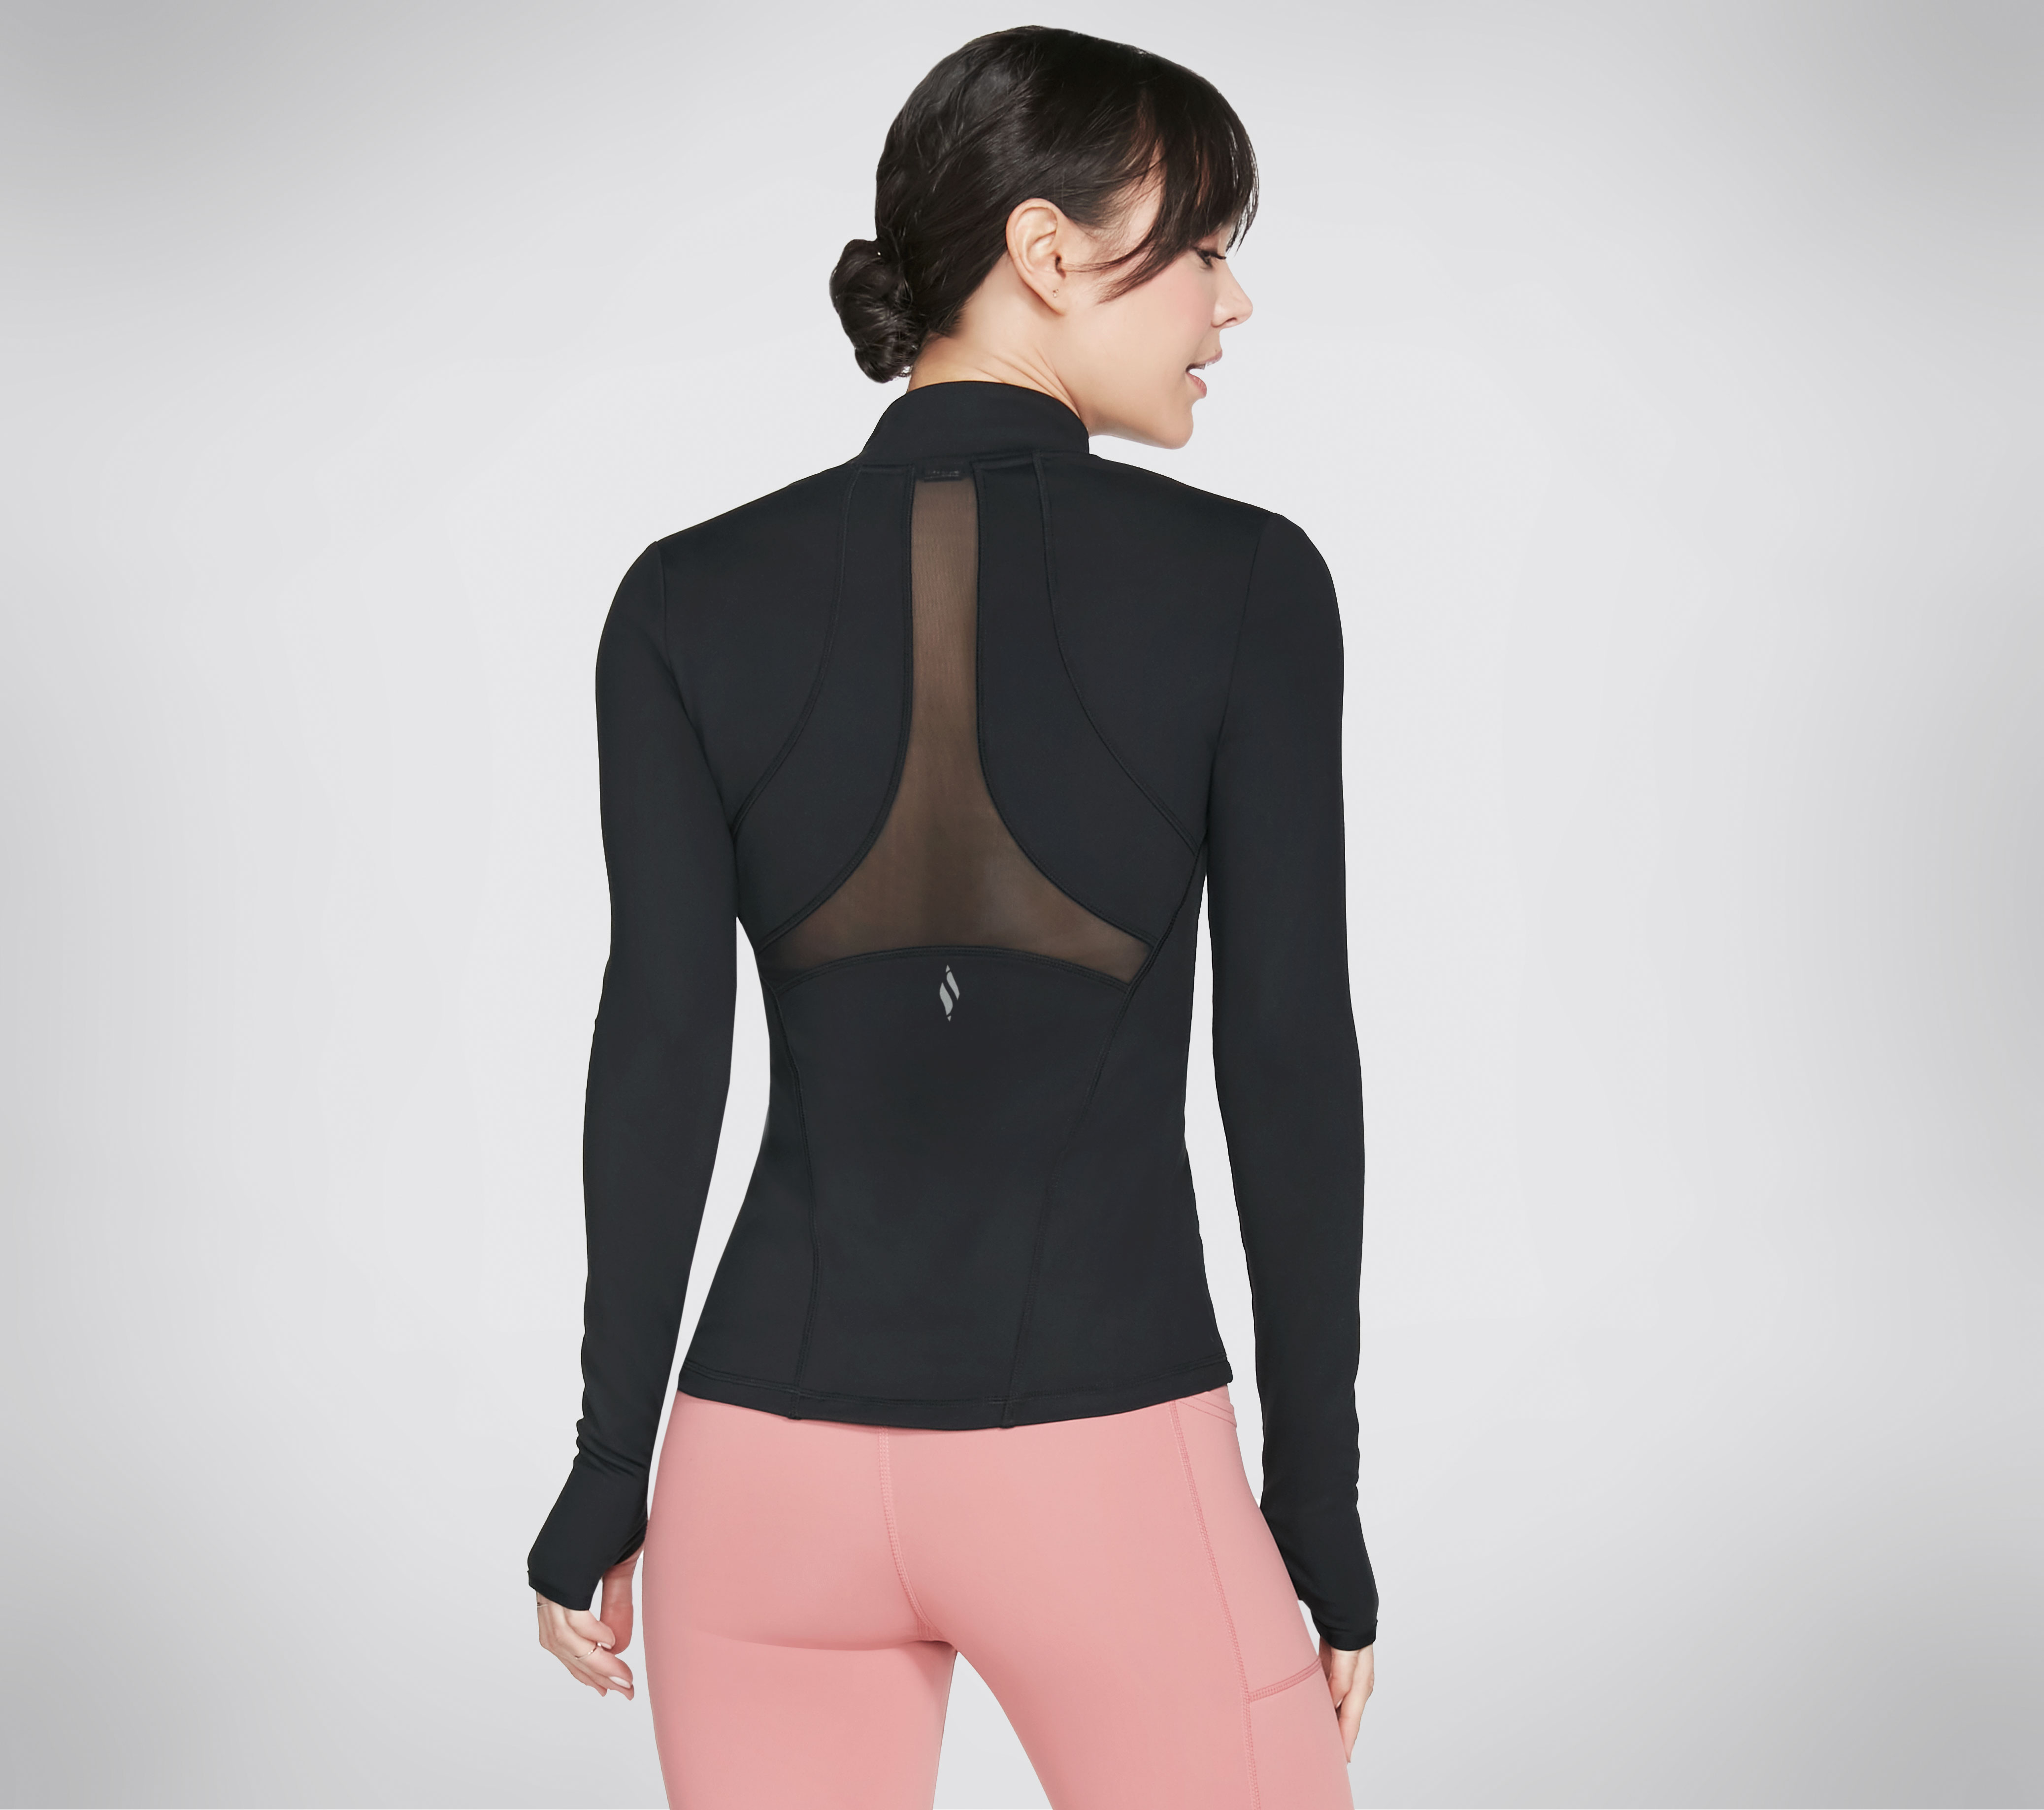 Skechers NEW Womens Goshield Approach Full Zip Fashion Jacket Black Small  $84